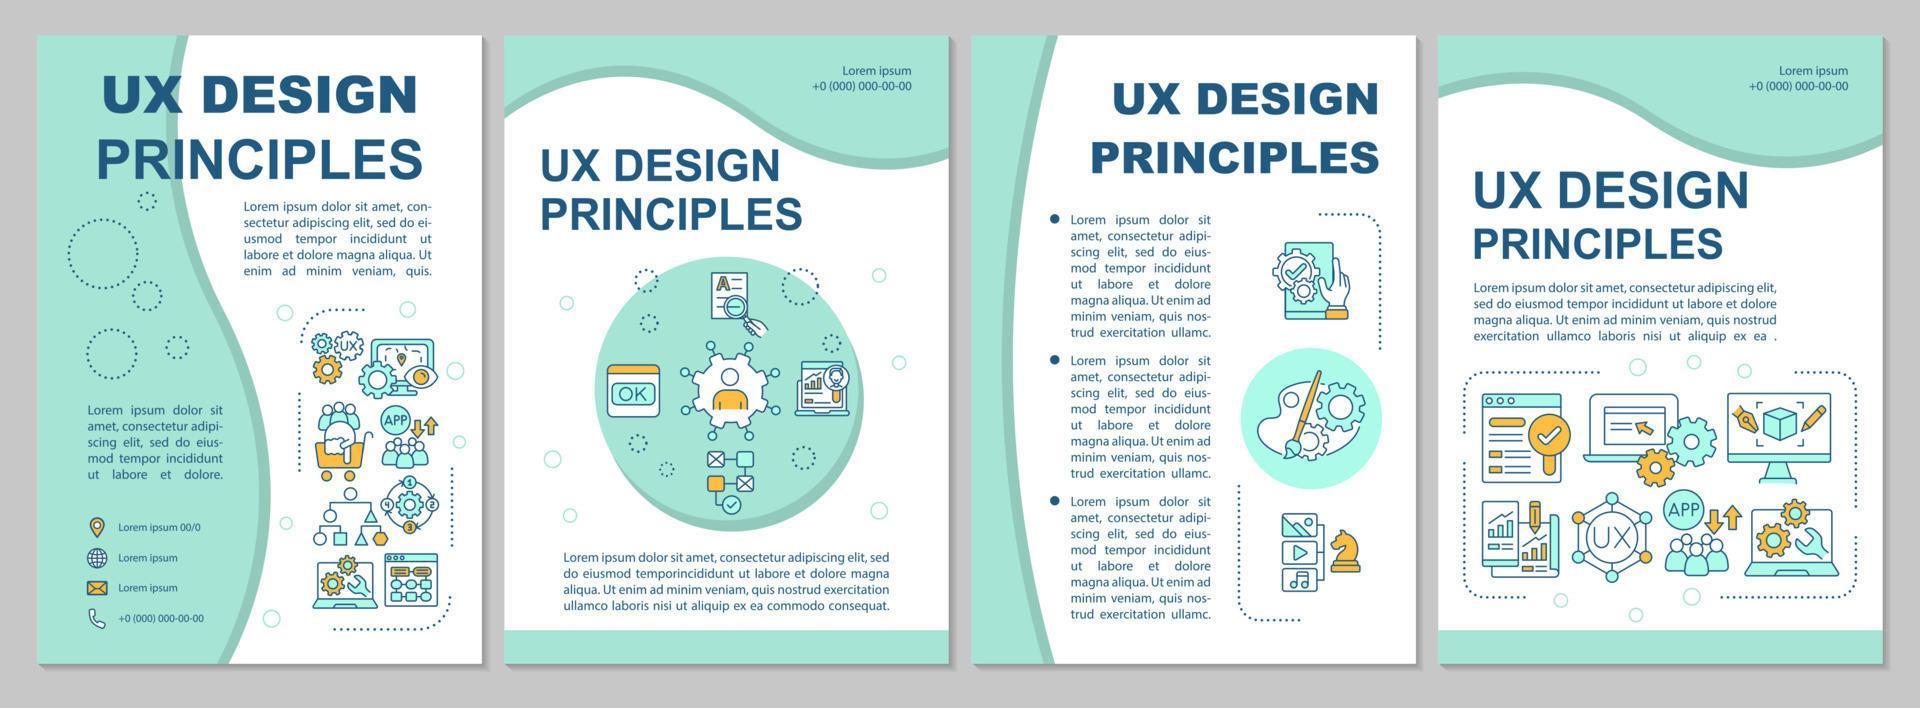 UX design principles brochure template vector